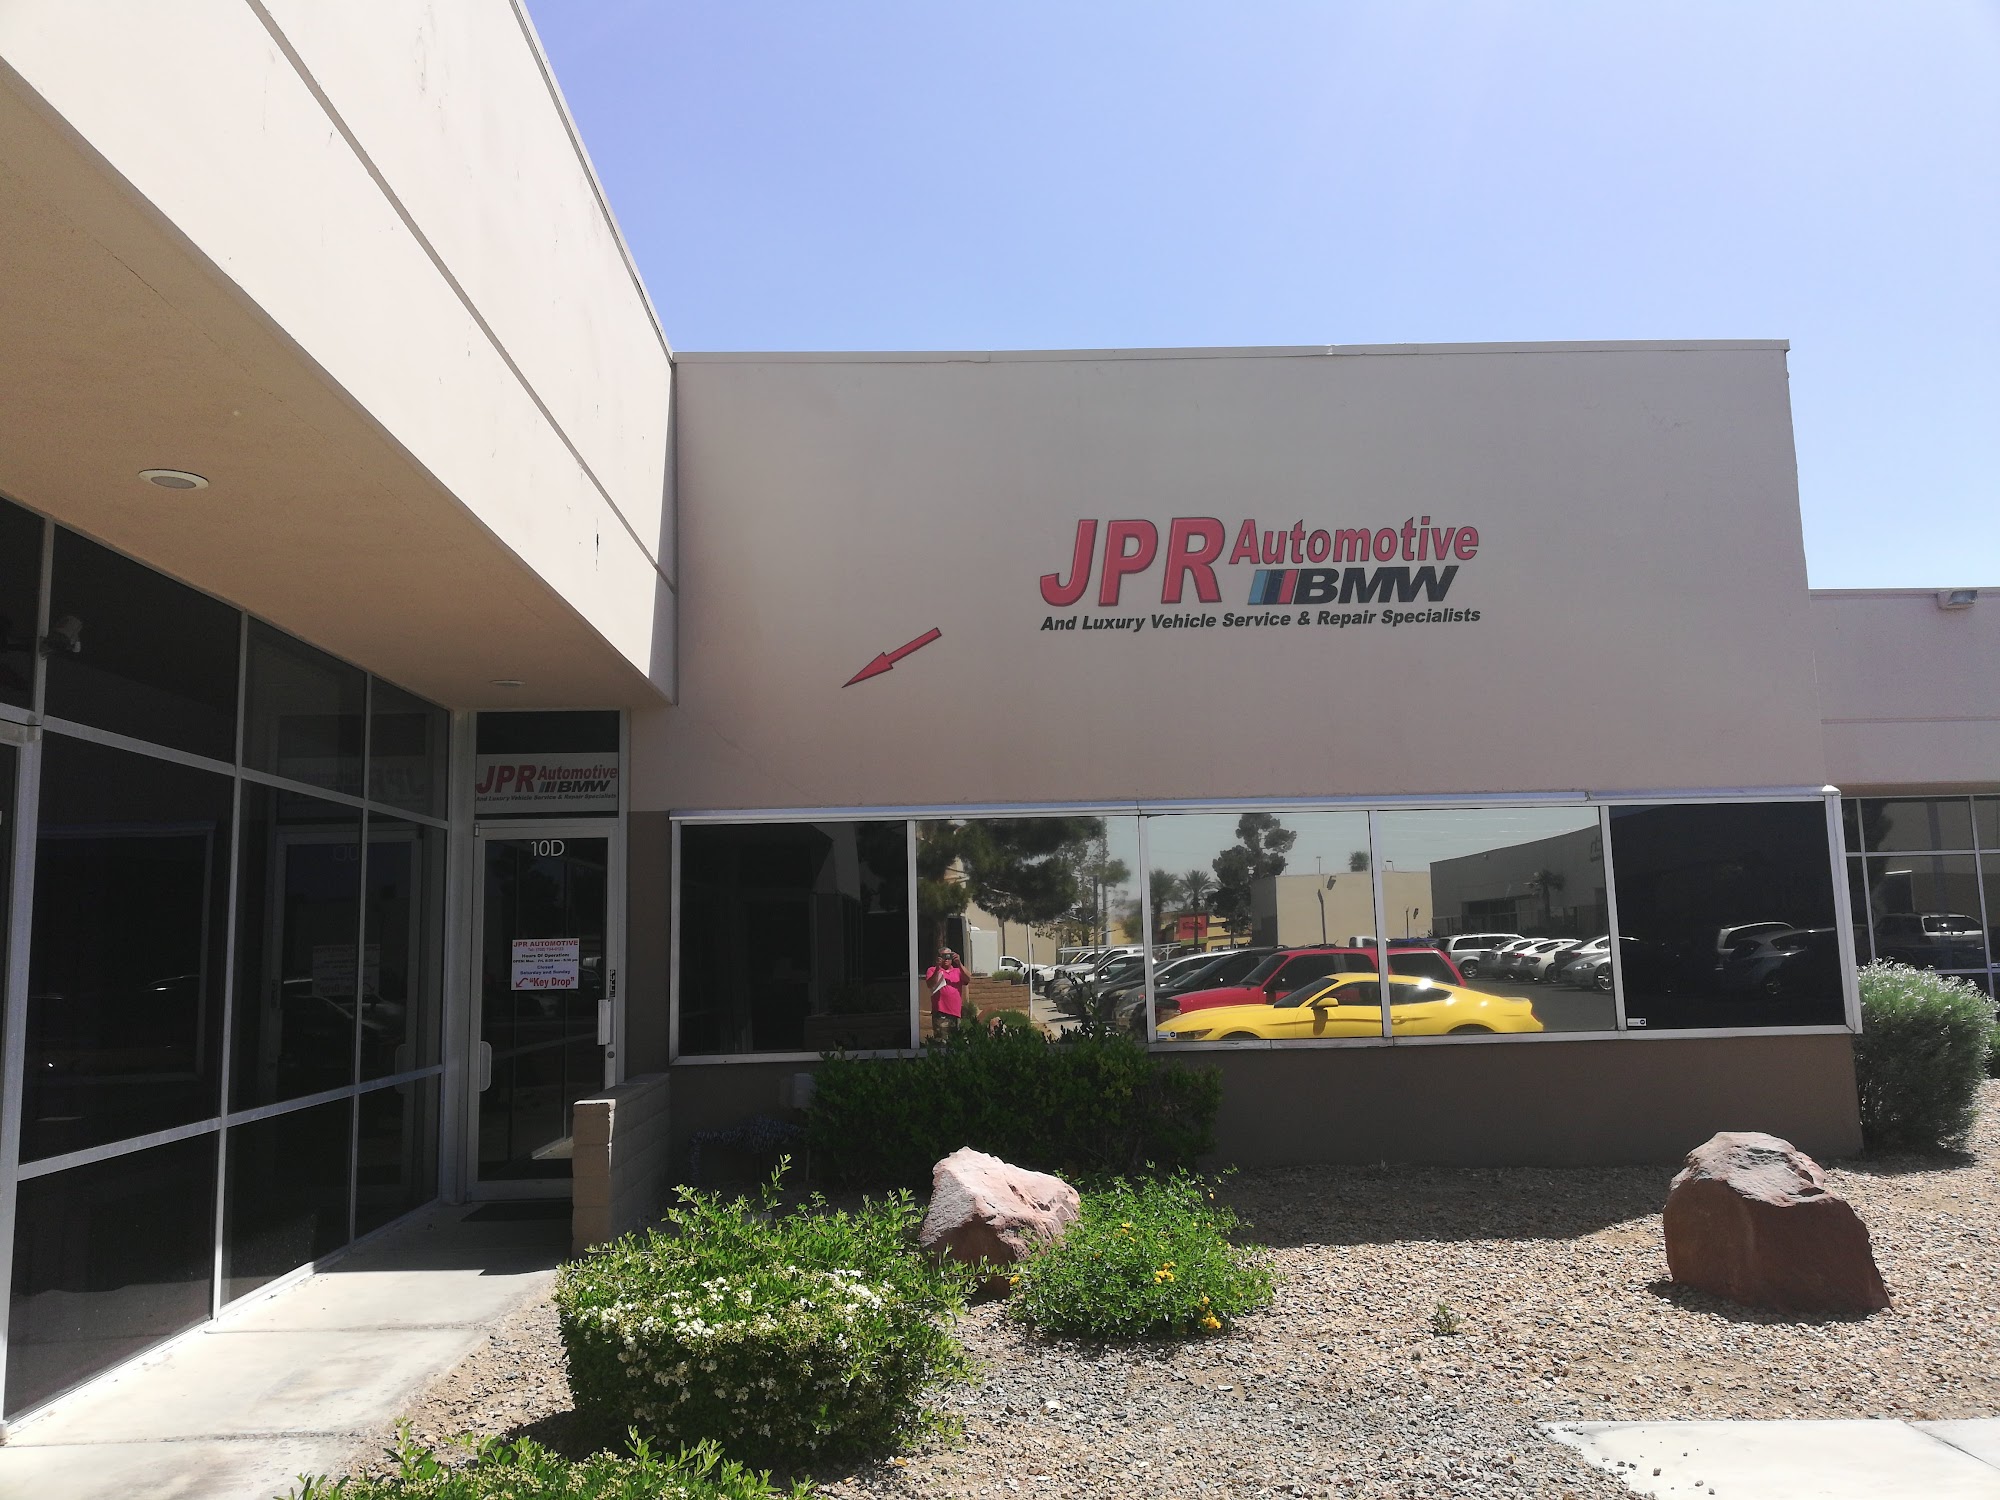 JPR Automotive